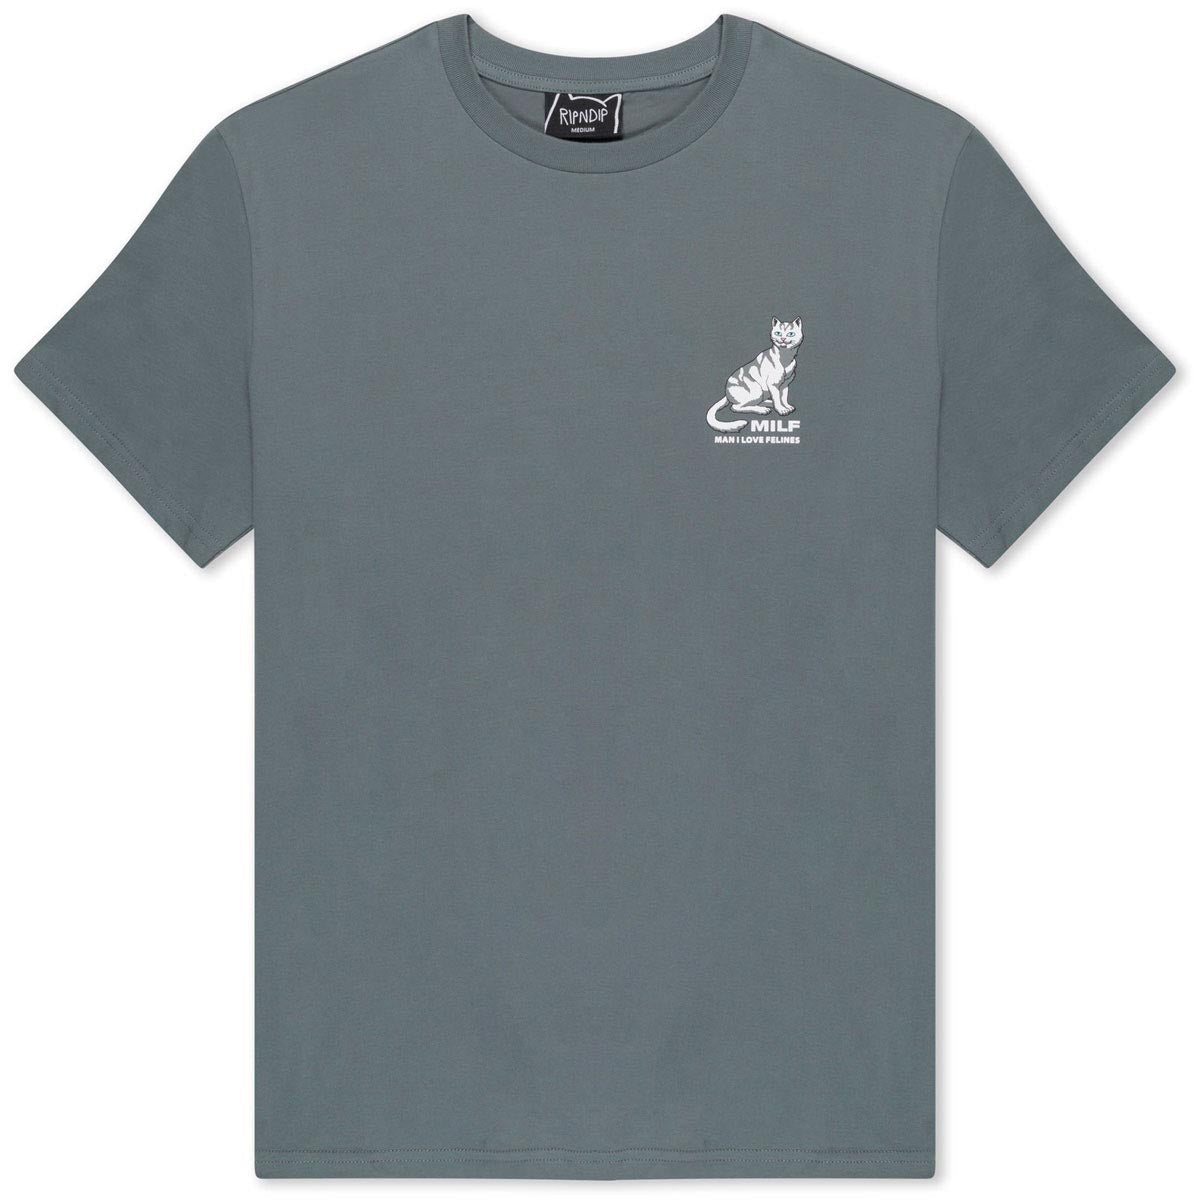 RIPNDIP Man I Love Felines T-Shirt - Charcoal image 2